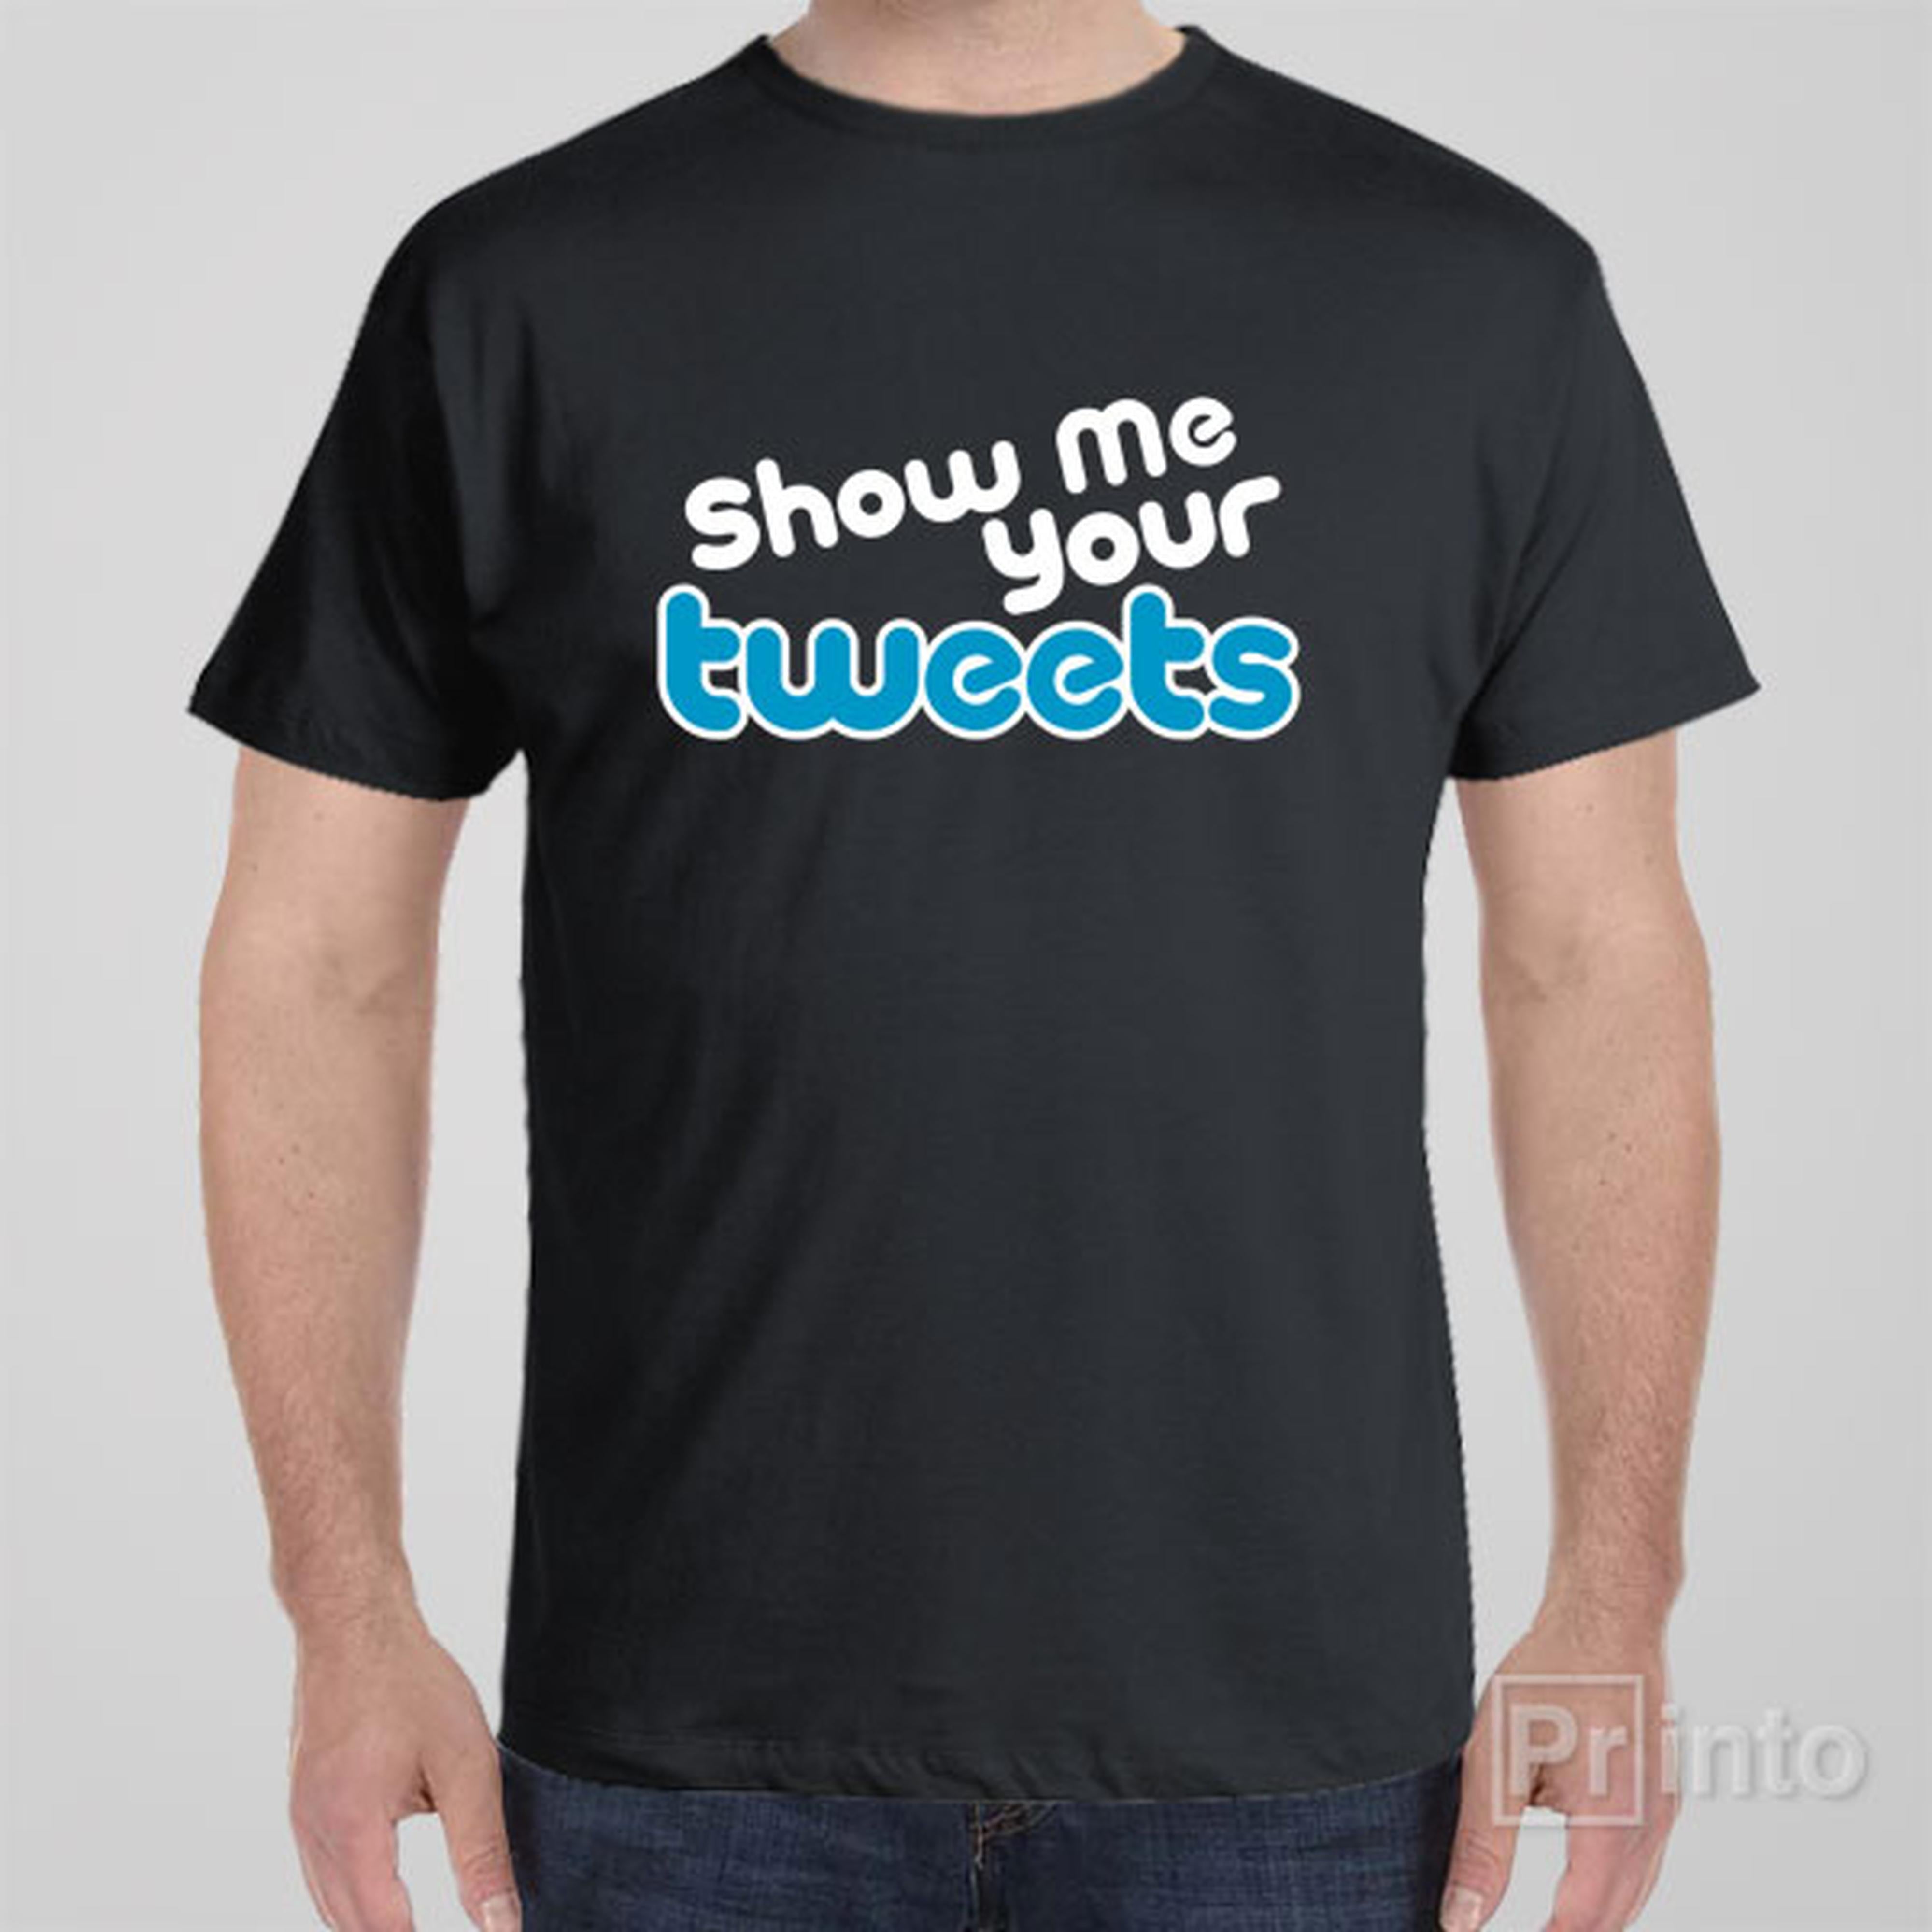 show-me-your-tweets-t-shirt